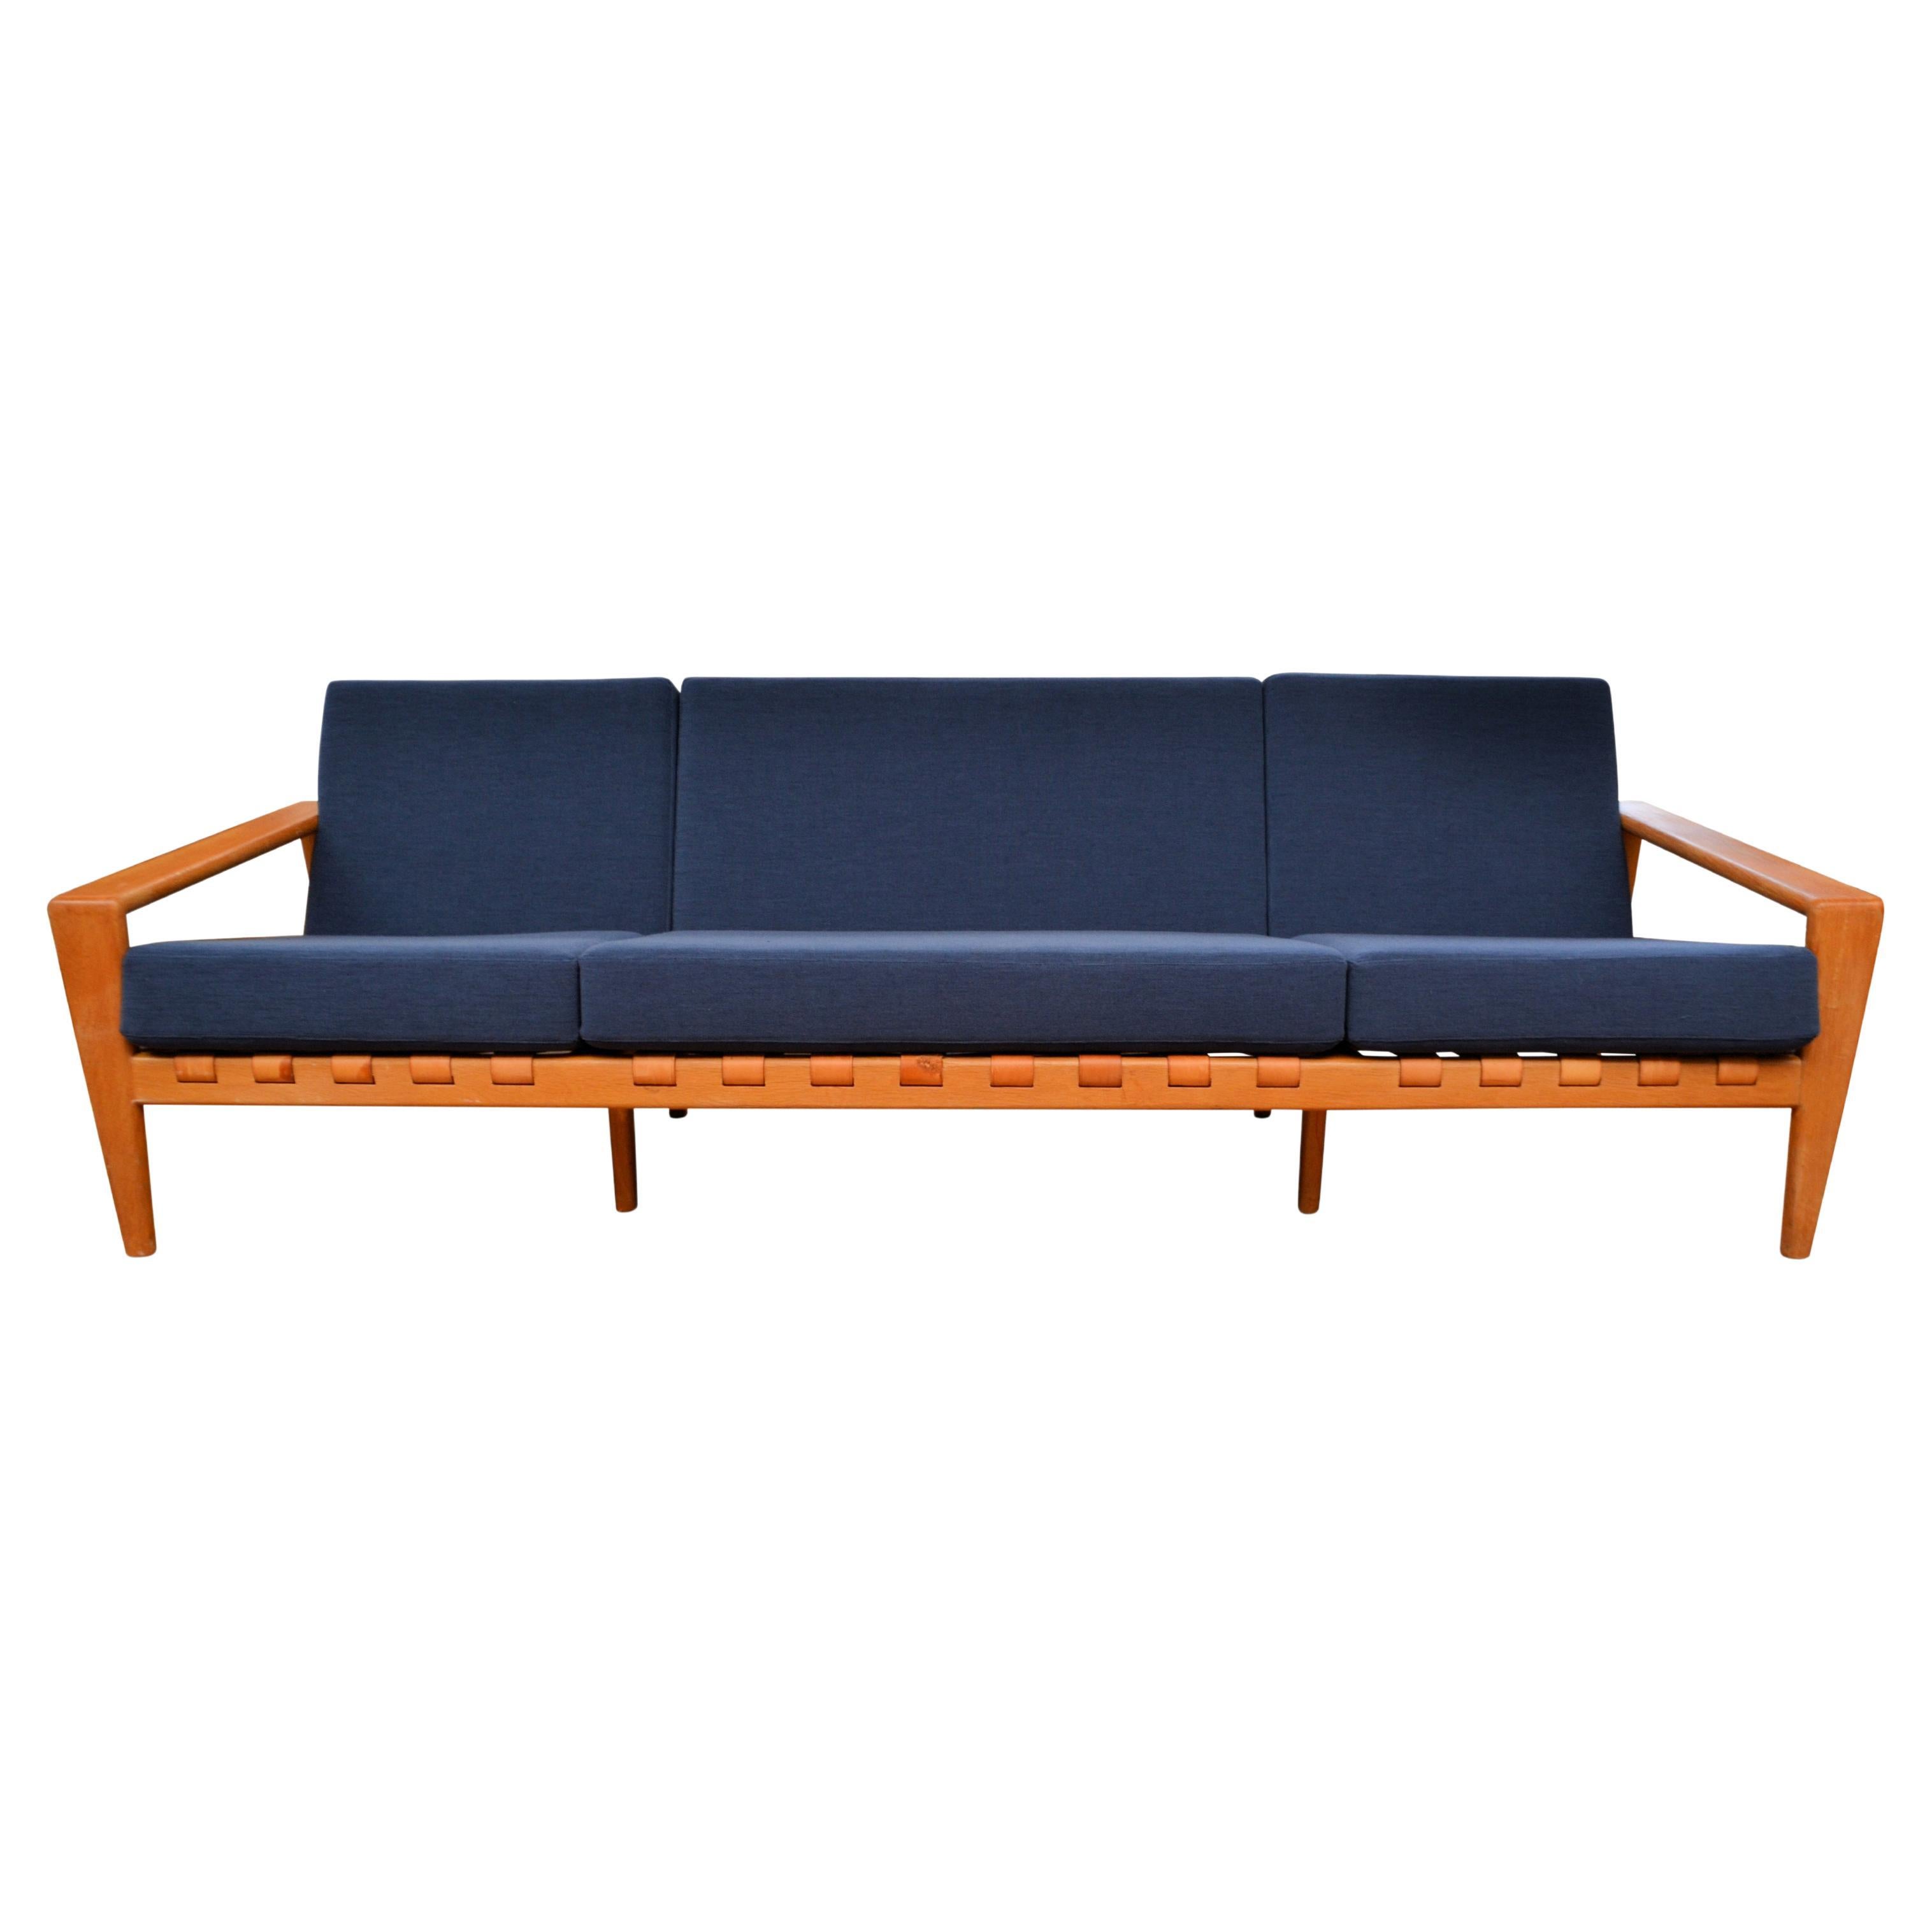 Swedish Design Svante Skogh Oak 3-Seating Sofa